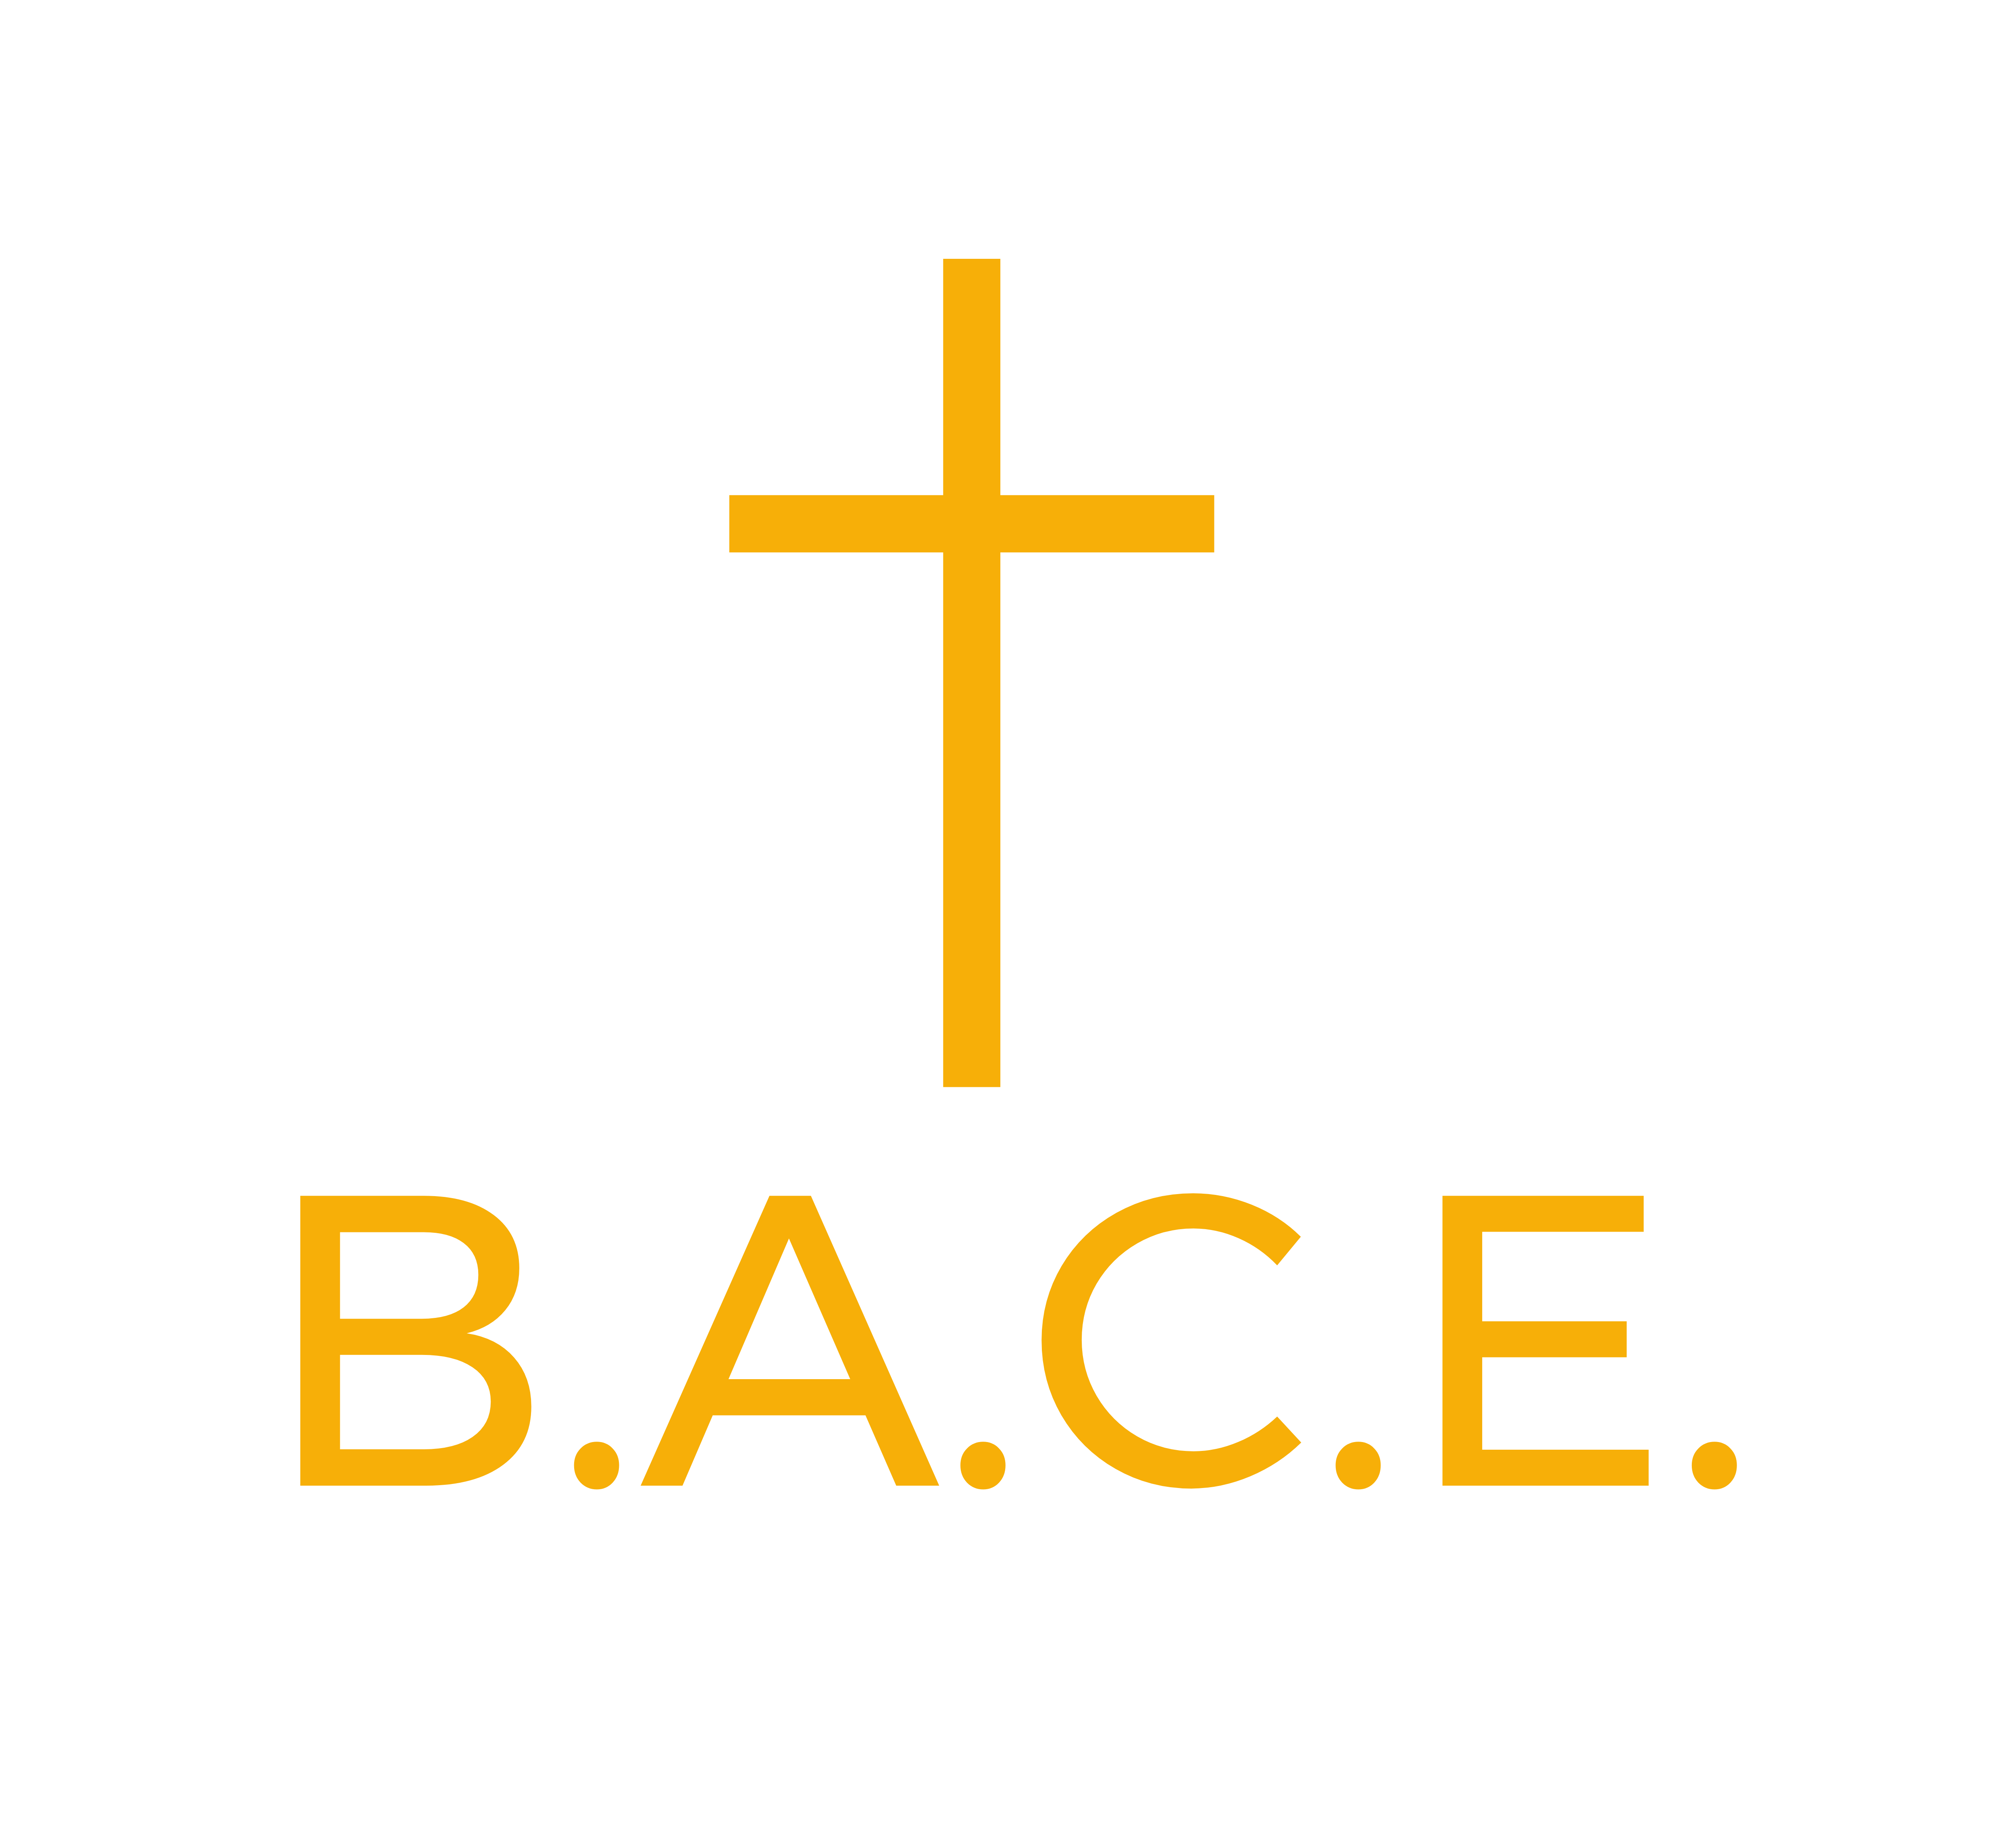 Bethel Apostolic Church of Excellence logo